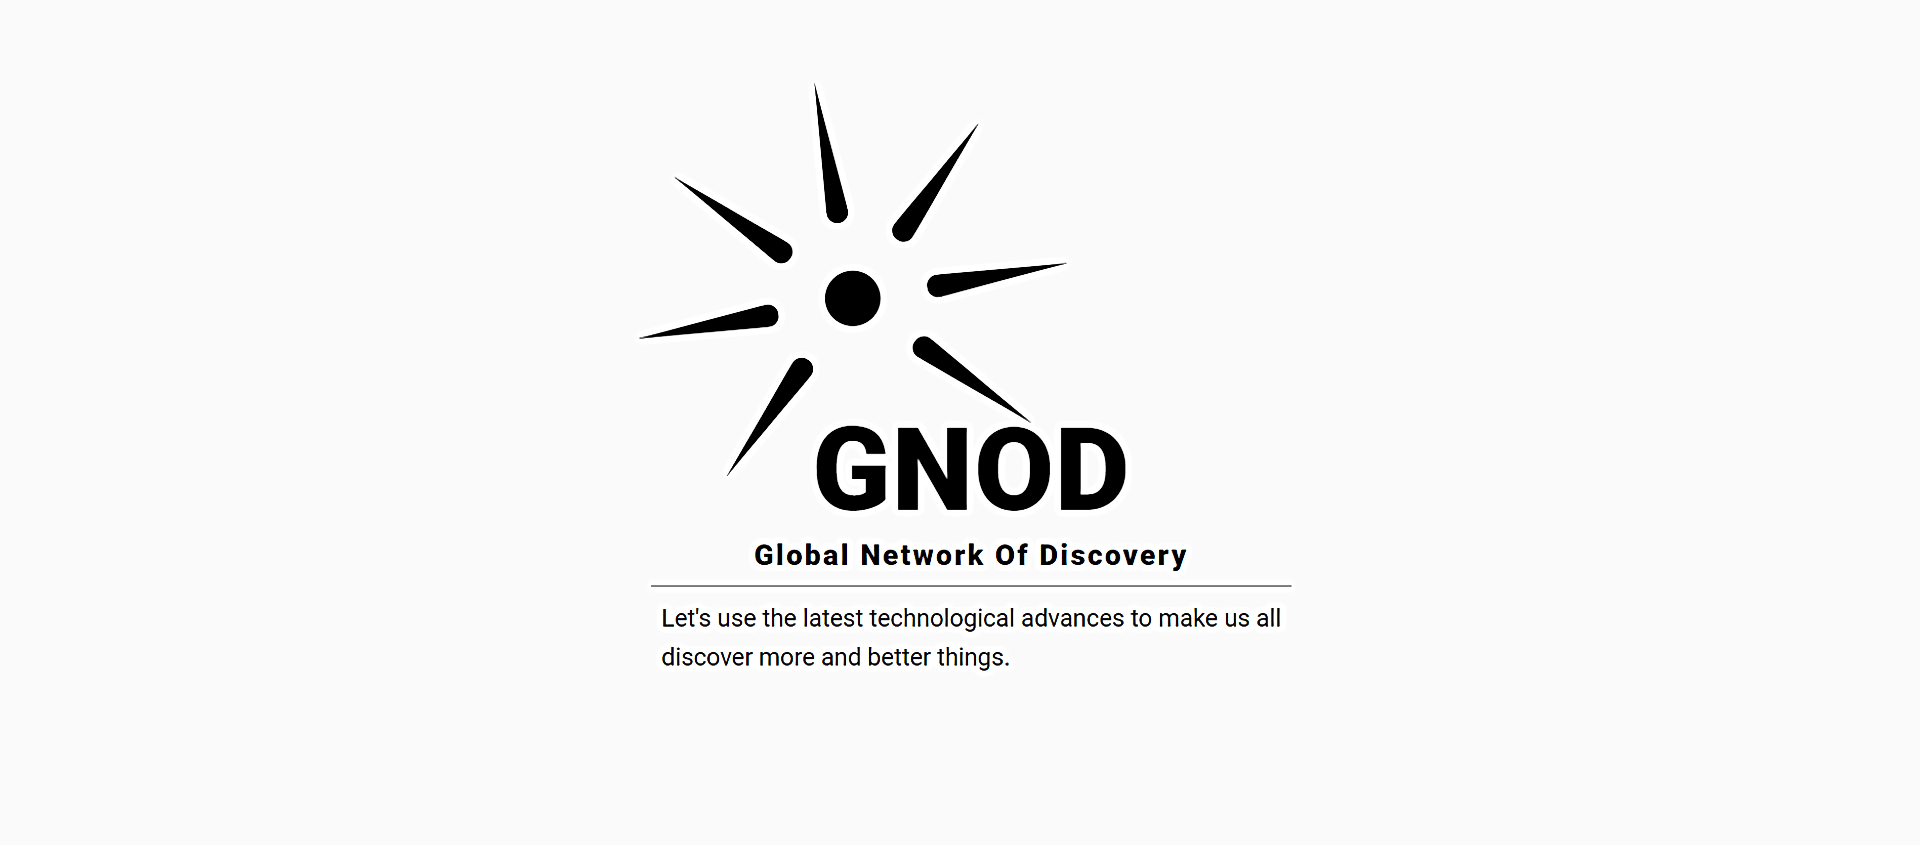 Gnod featured